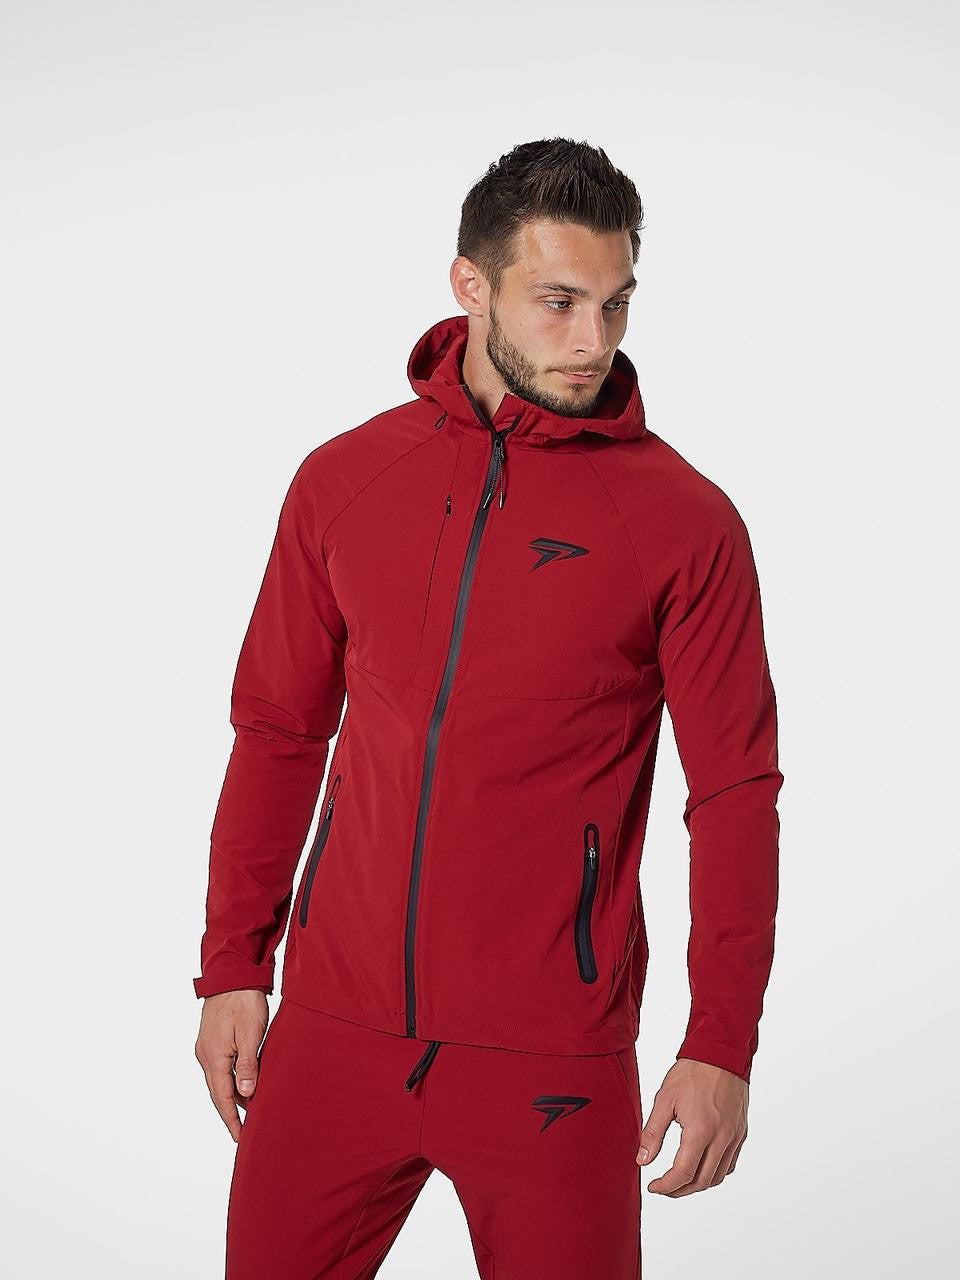 PHYSIQ APPAREL Aero Jacket Men's Zipped Track Top Red - Activemen Clothing